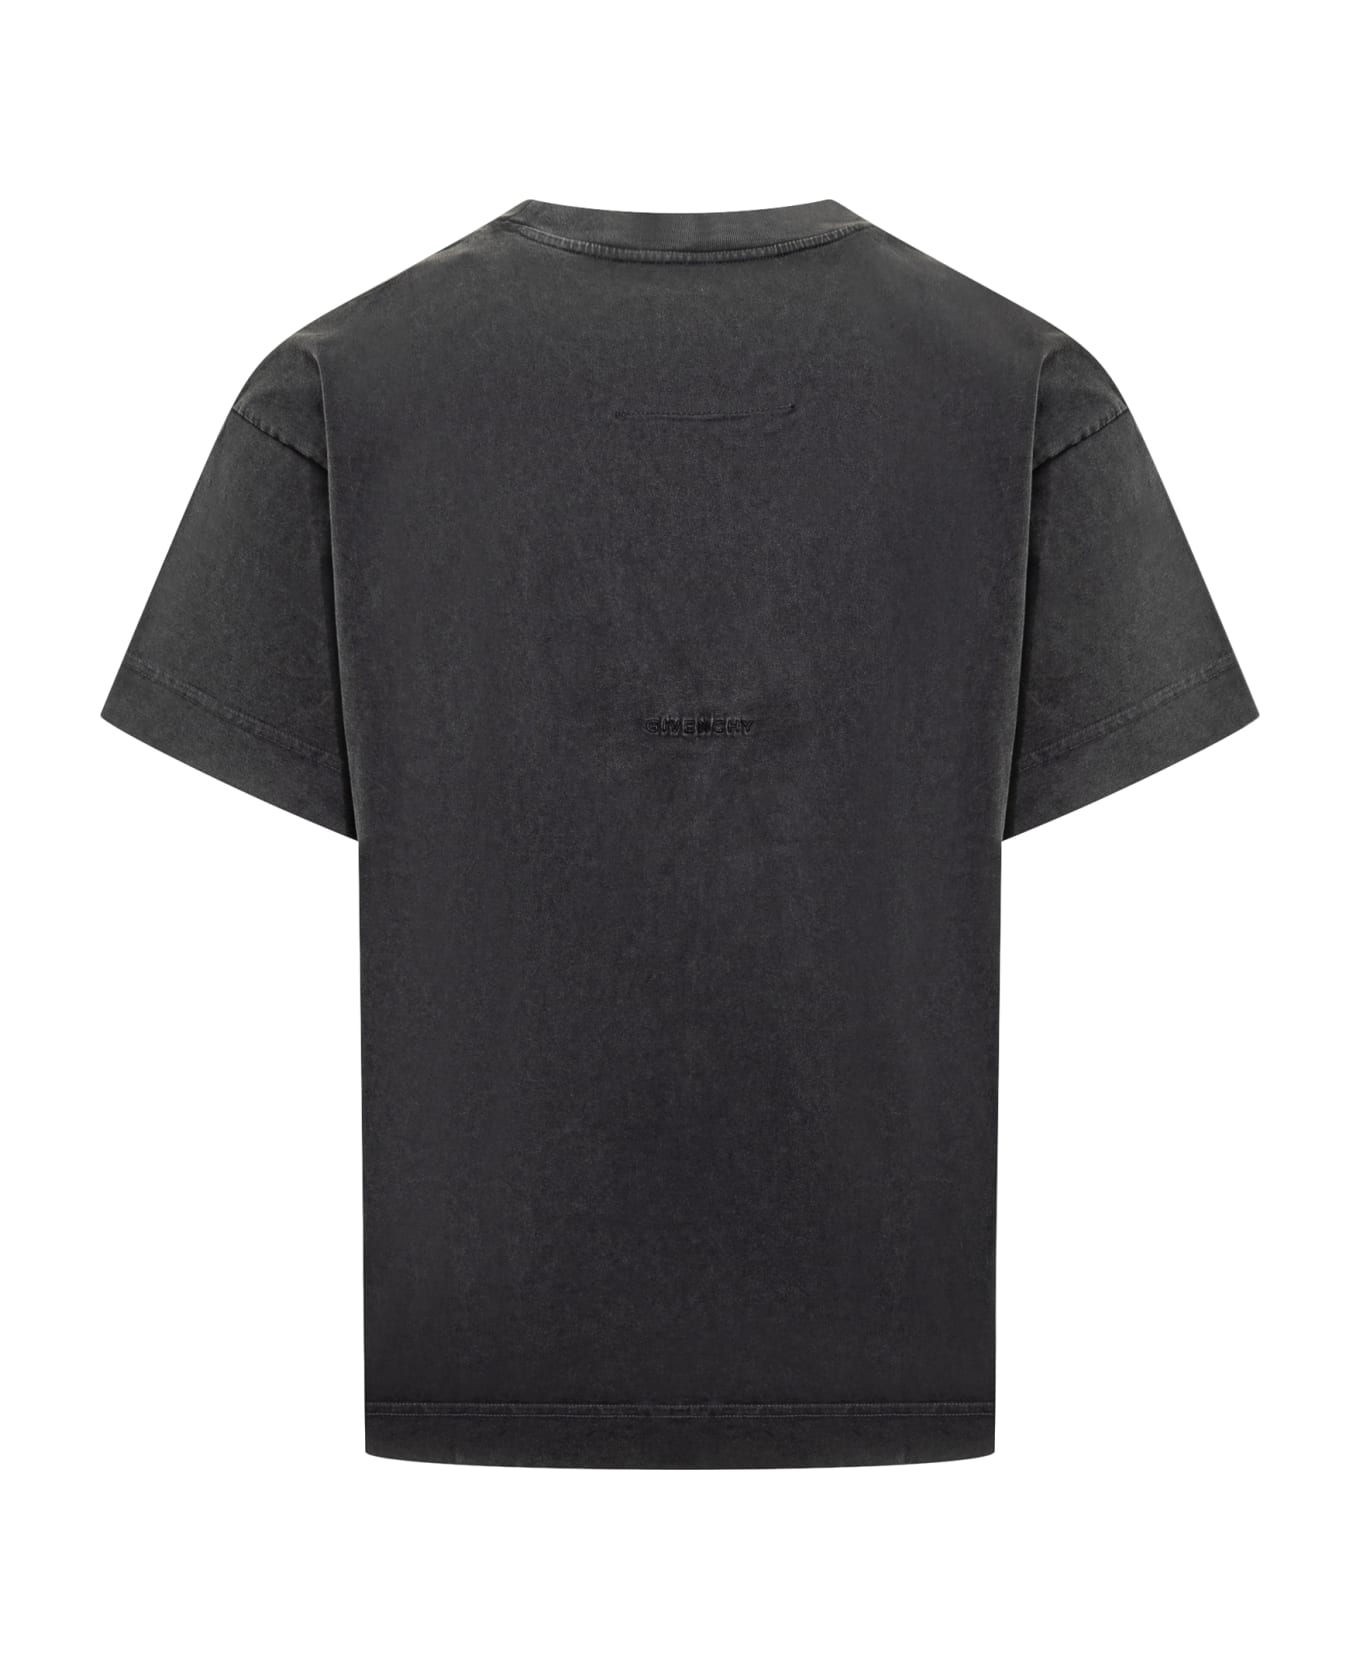 Givenchy T-shirt - FADED BLACK